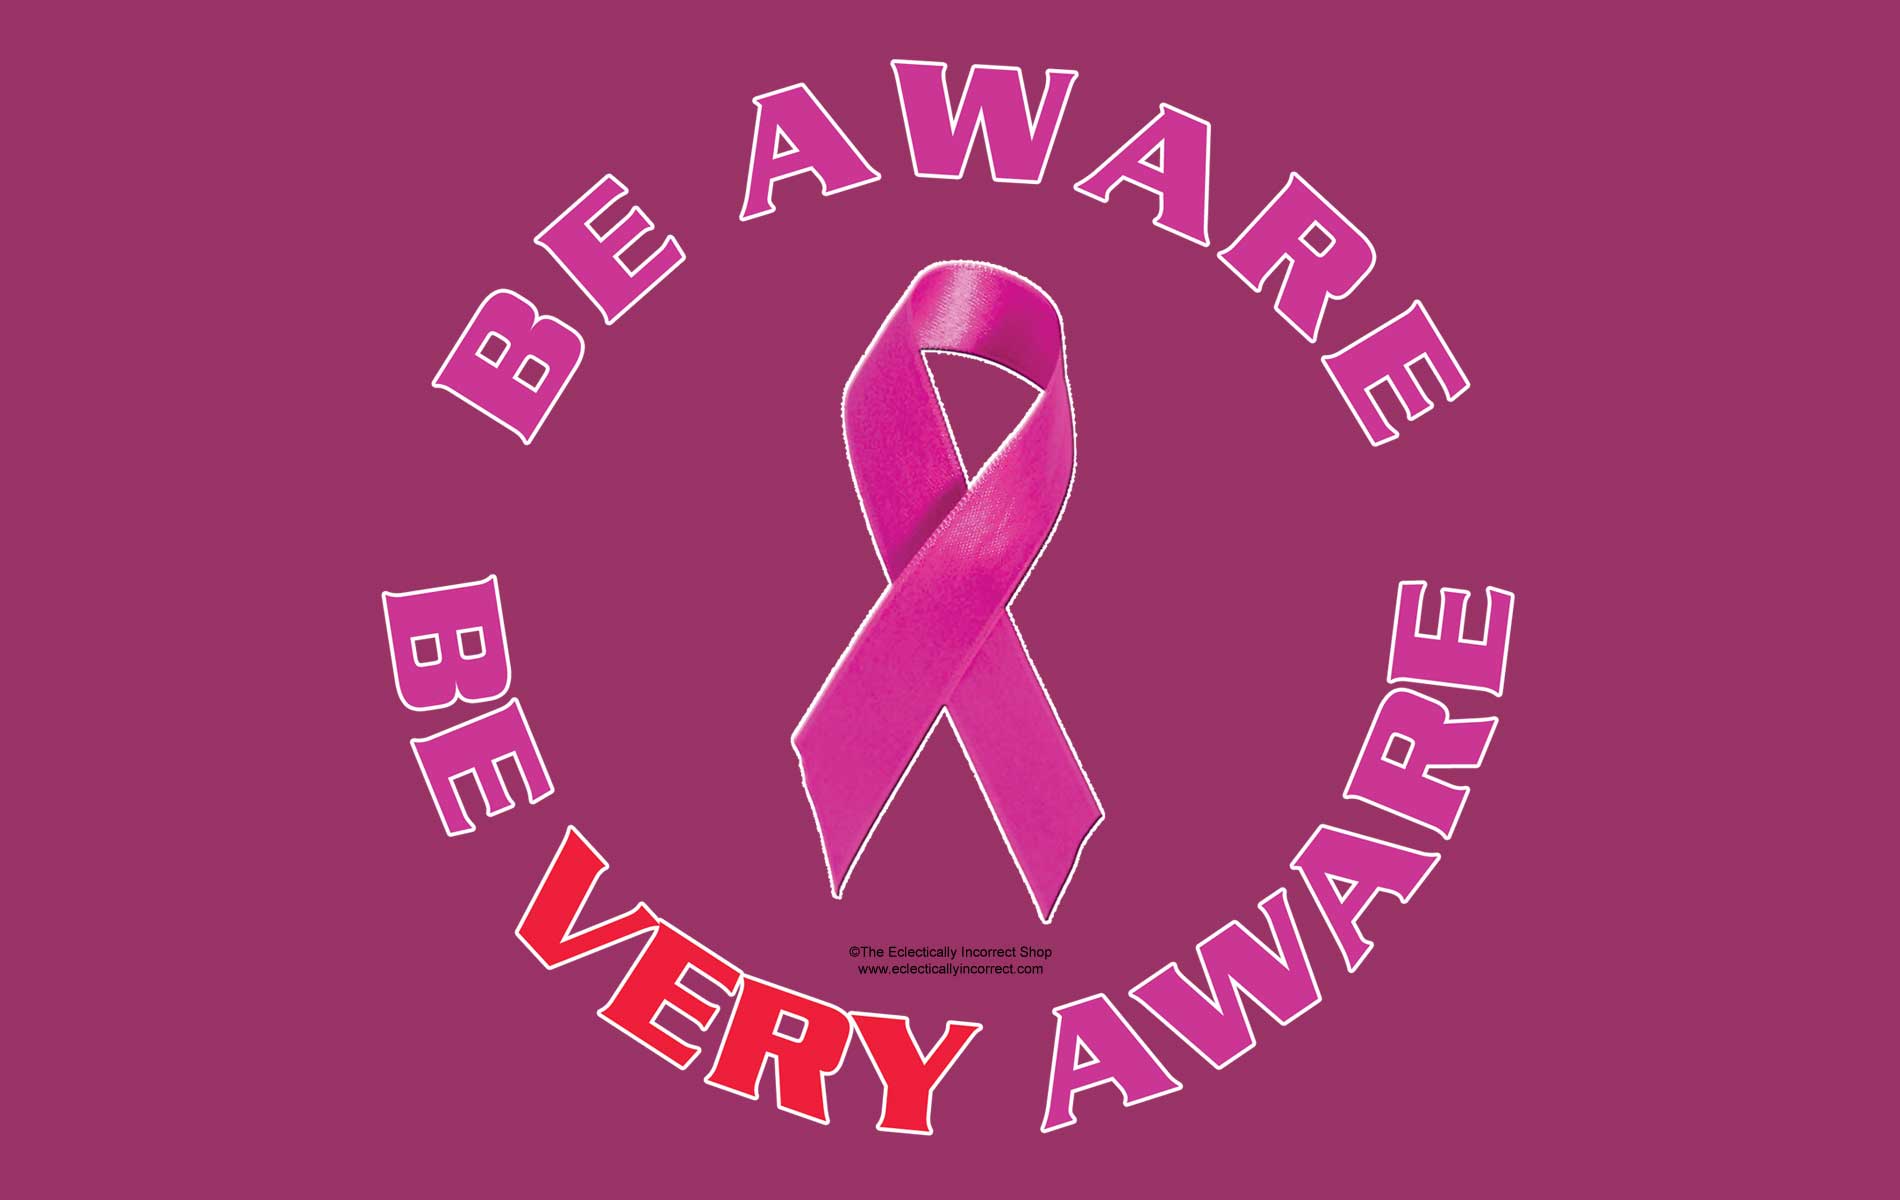 Breast Cancer Awareness Wallpaper Desktop